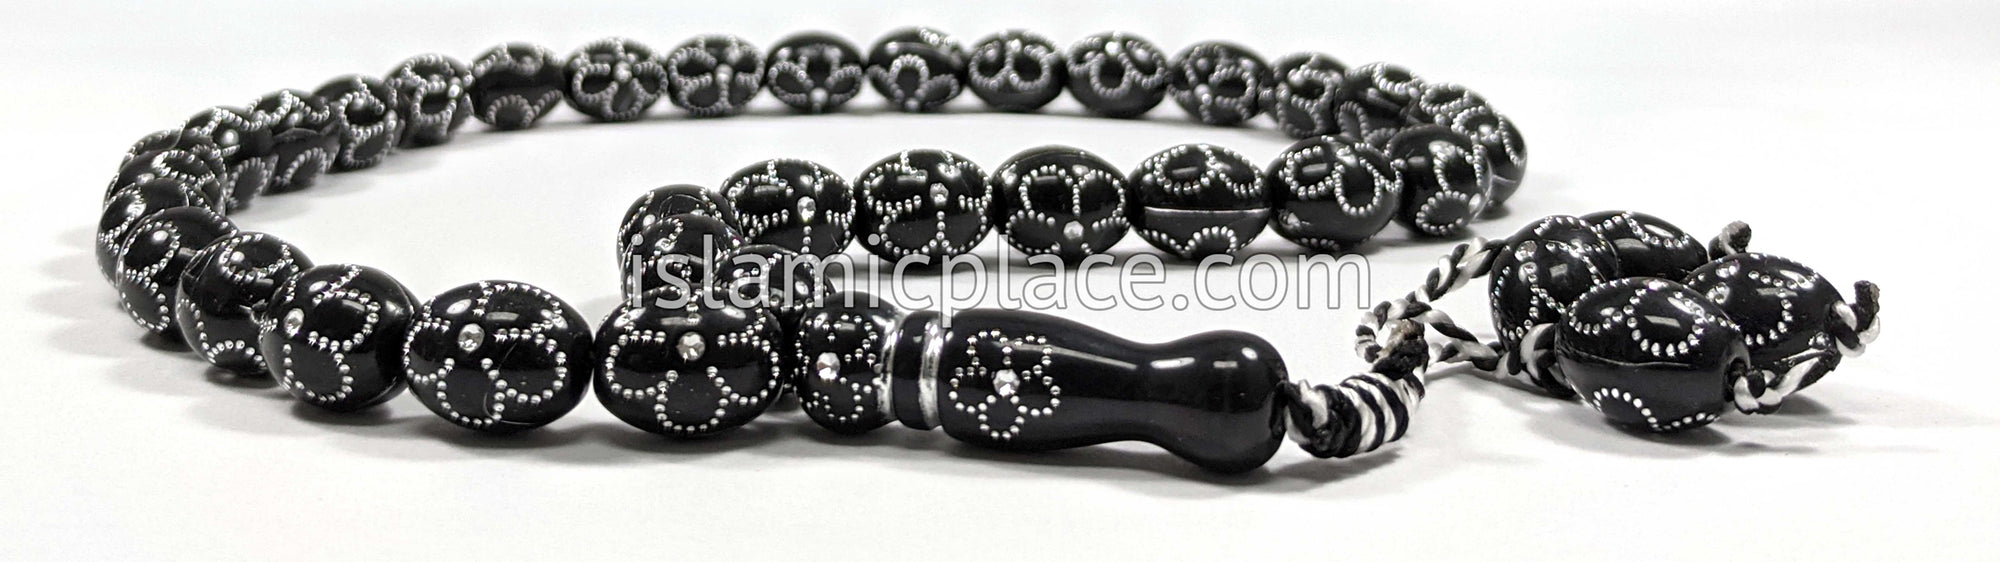 Black - Five Petals Design Tasbih with 33 Prayer Beads